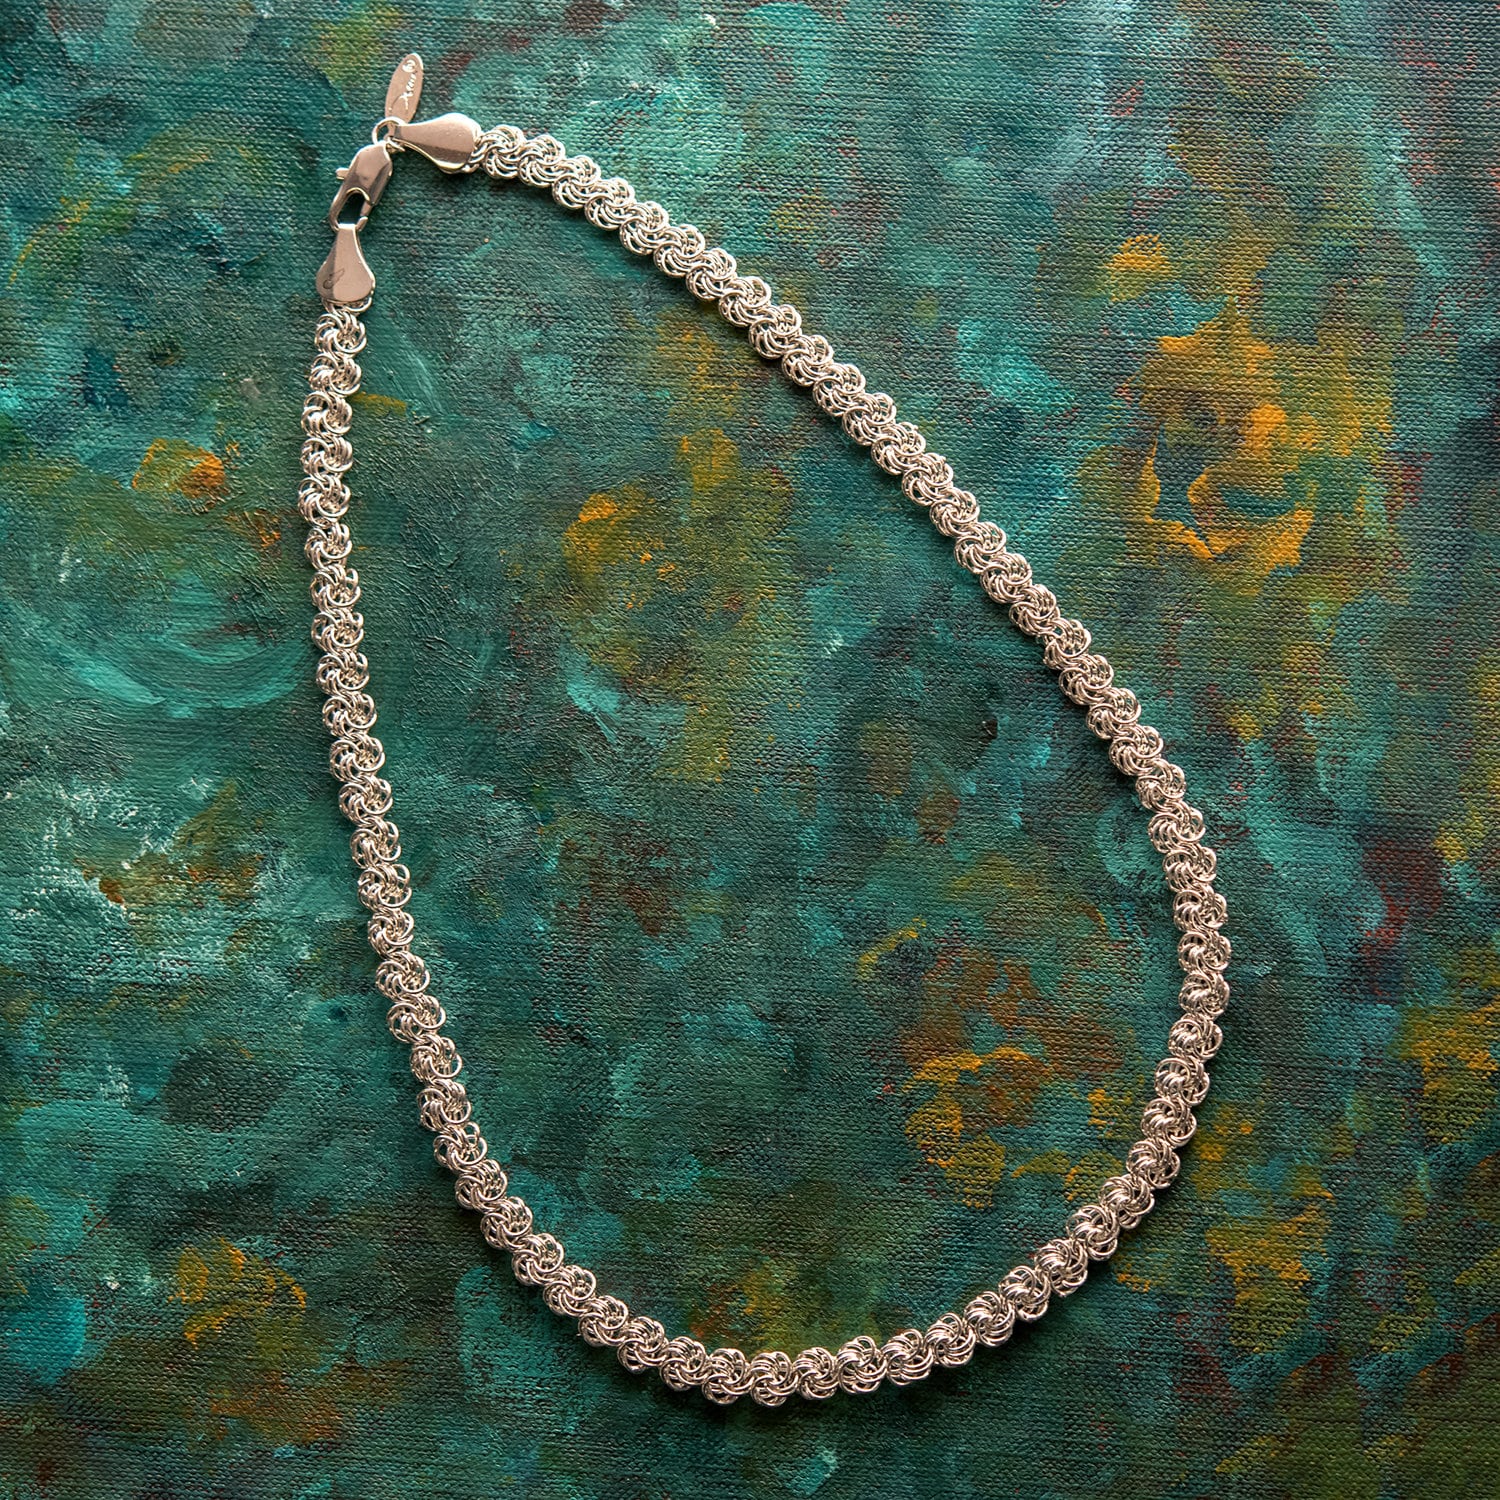 Vintage Oscar De La Renta 16.5 inch White Gold Silver Tone Link Chain Necklace Womans Designer #OSN-981-W - Limited Stock - Never Worn